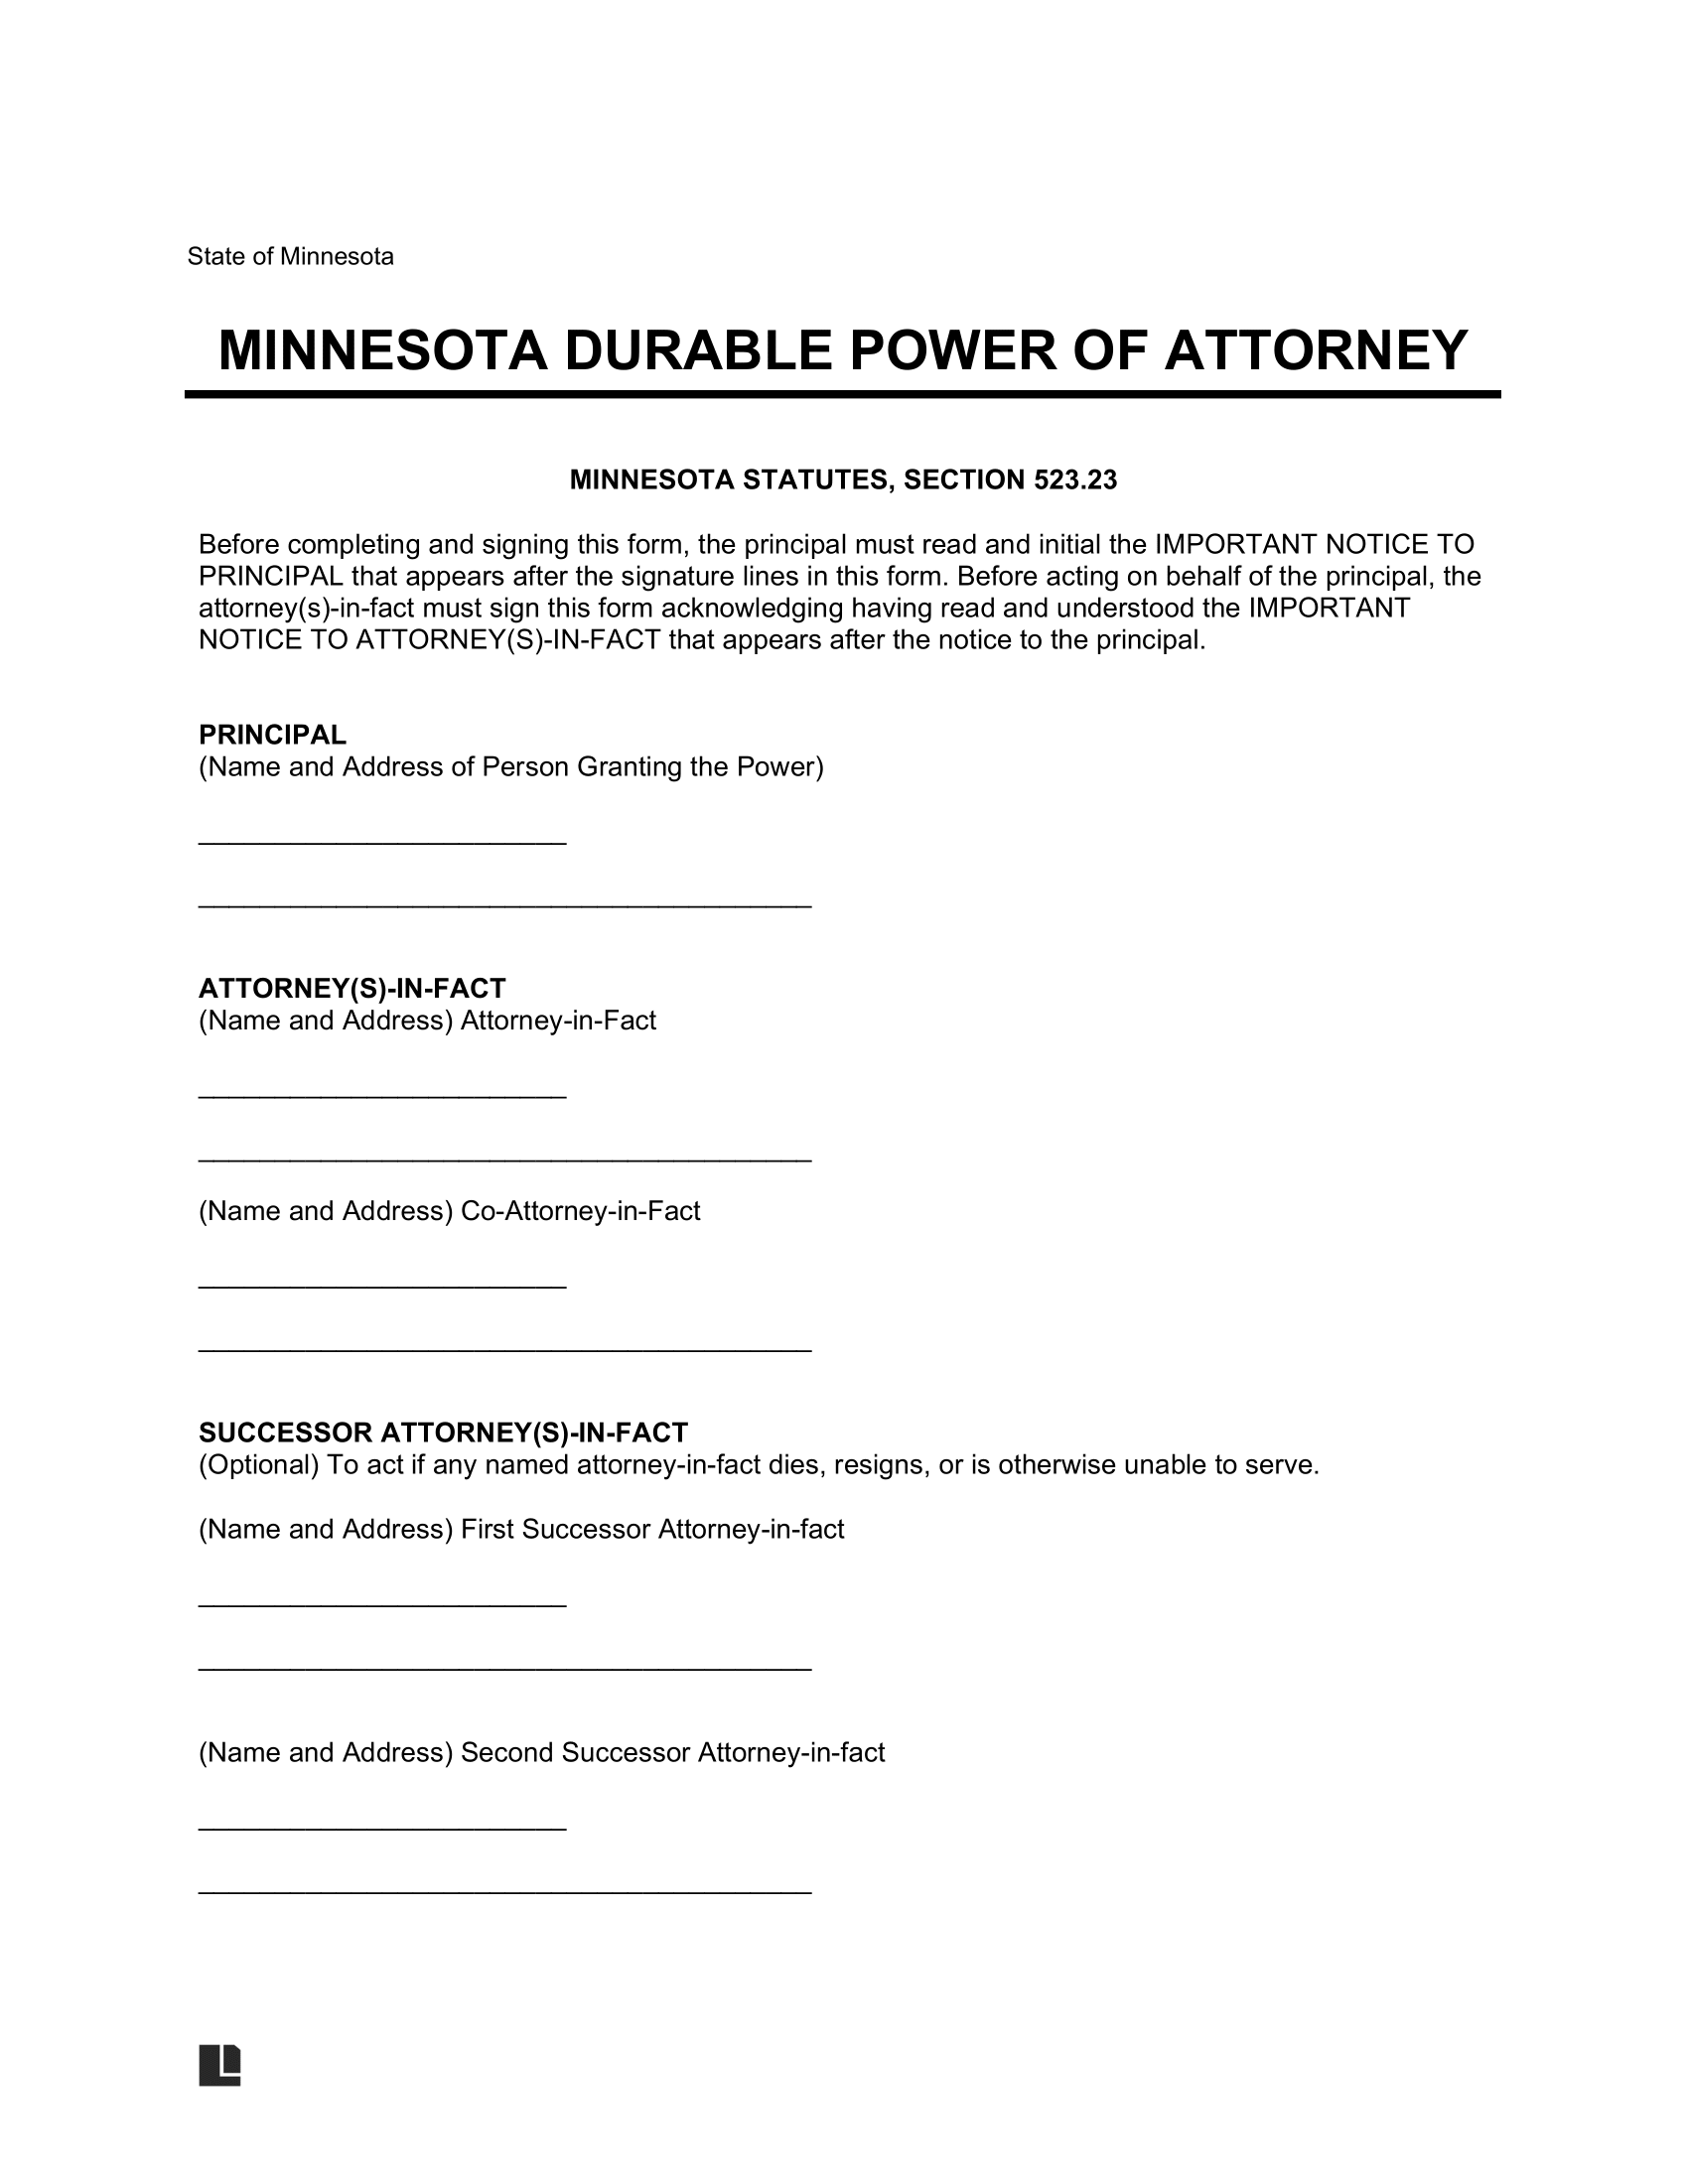 Minnesota Durable Statutory Power of Attorney Form